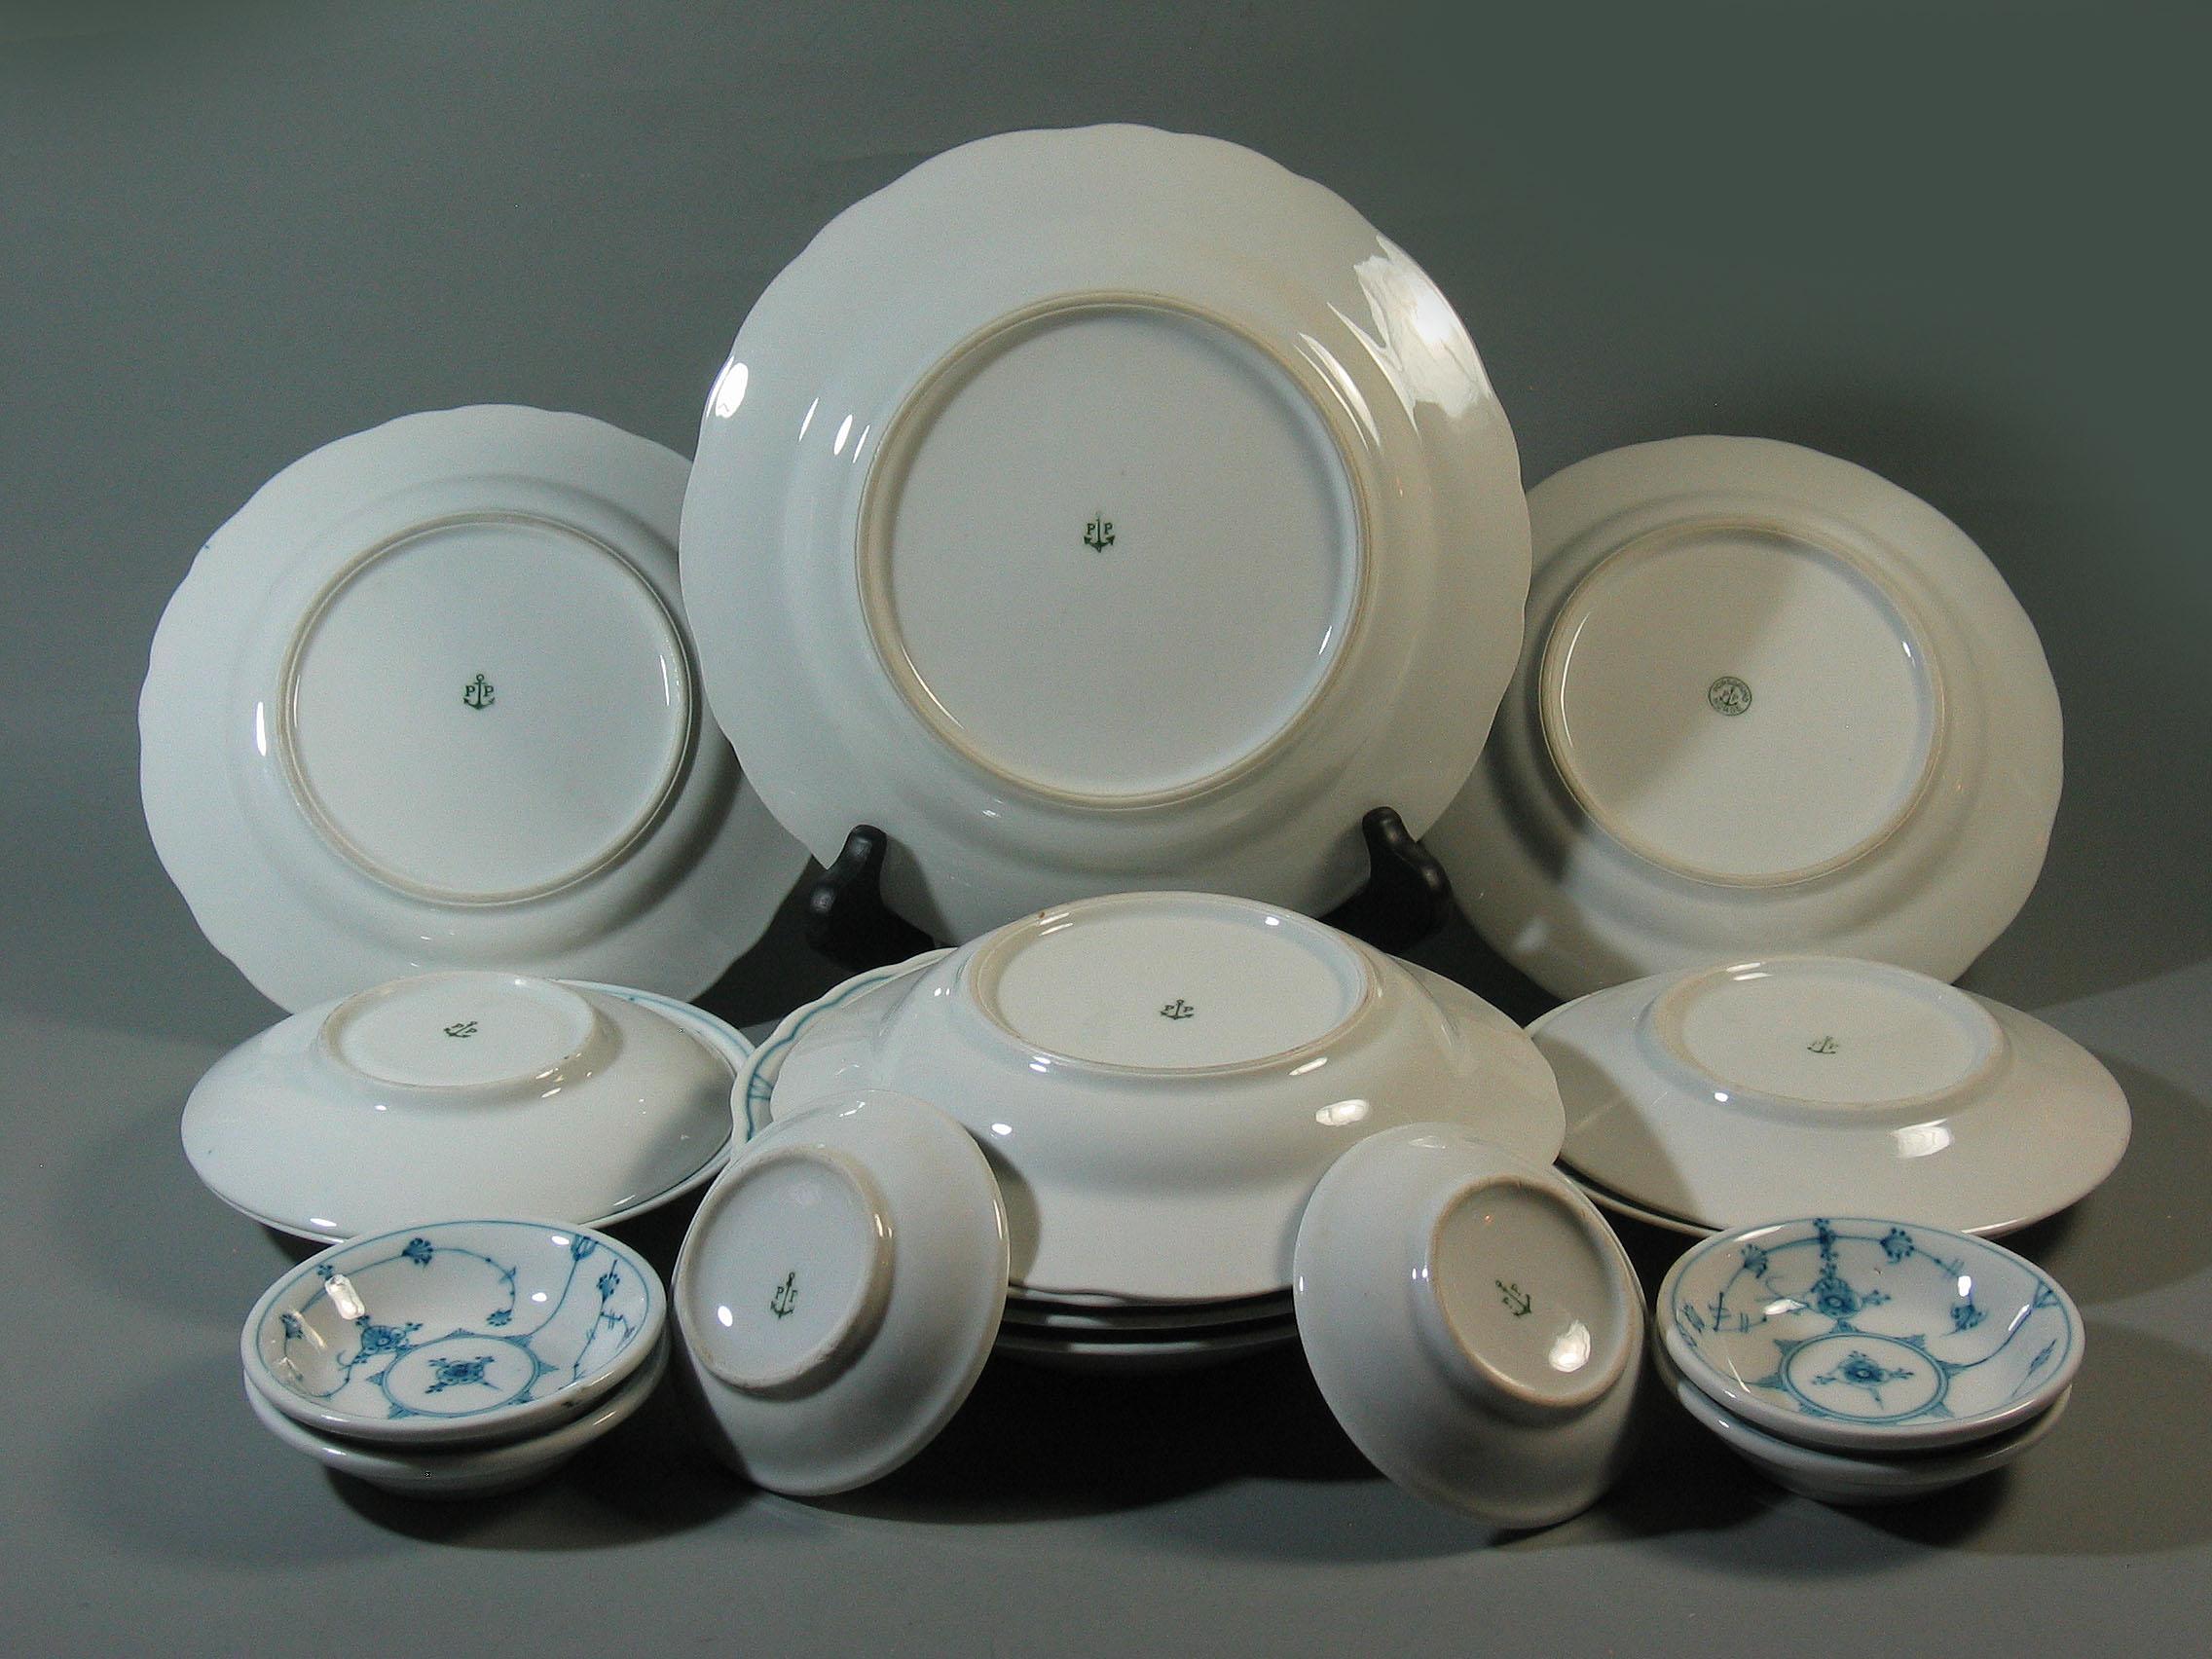 Norwegian Lot of 17 Porsgrund Hand Painted Porcelain Plates in “Bogstad Straw” Pattern